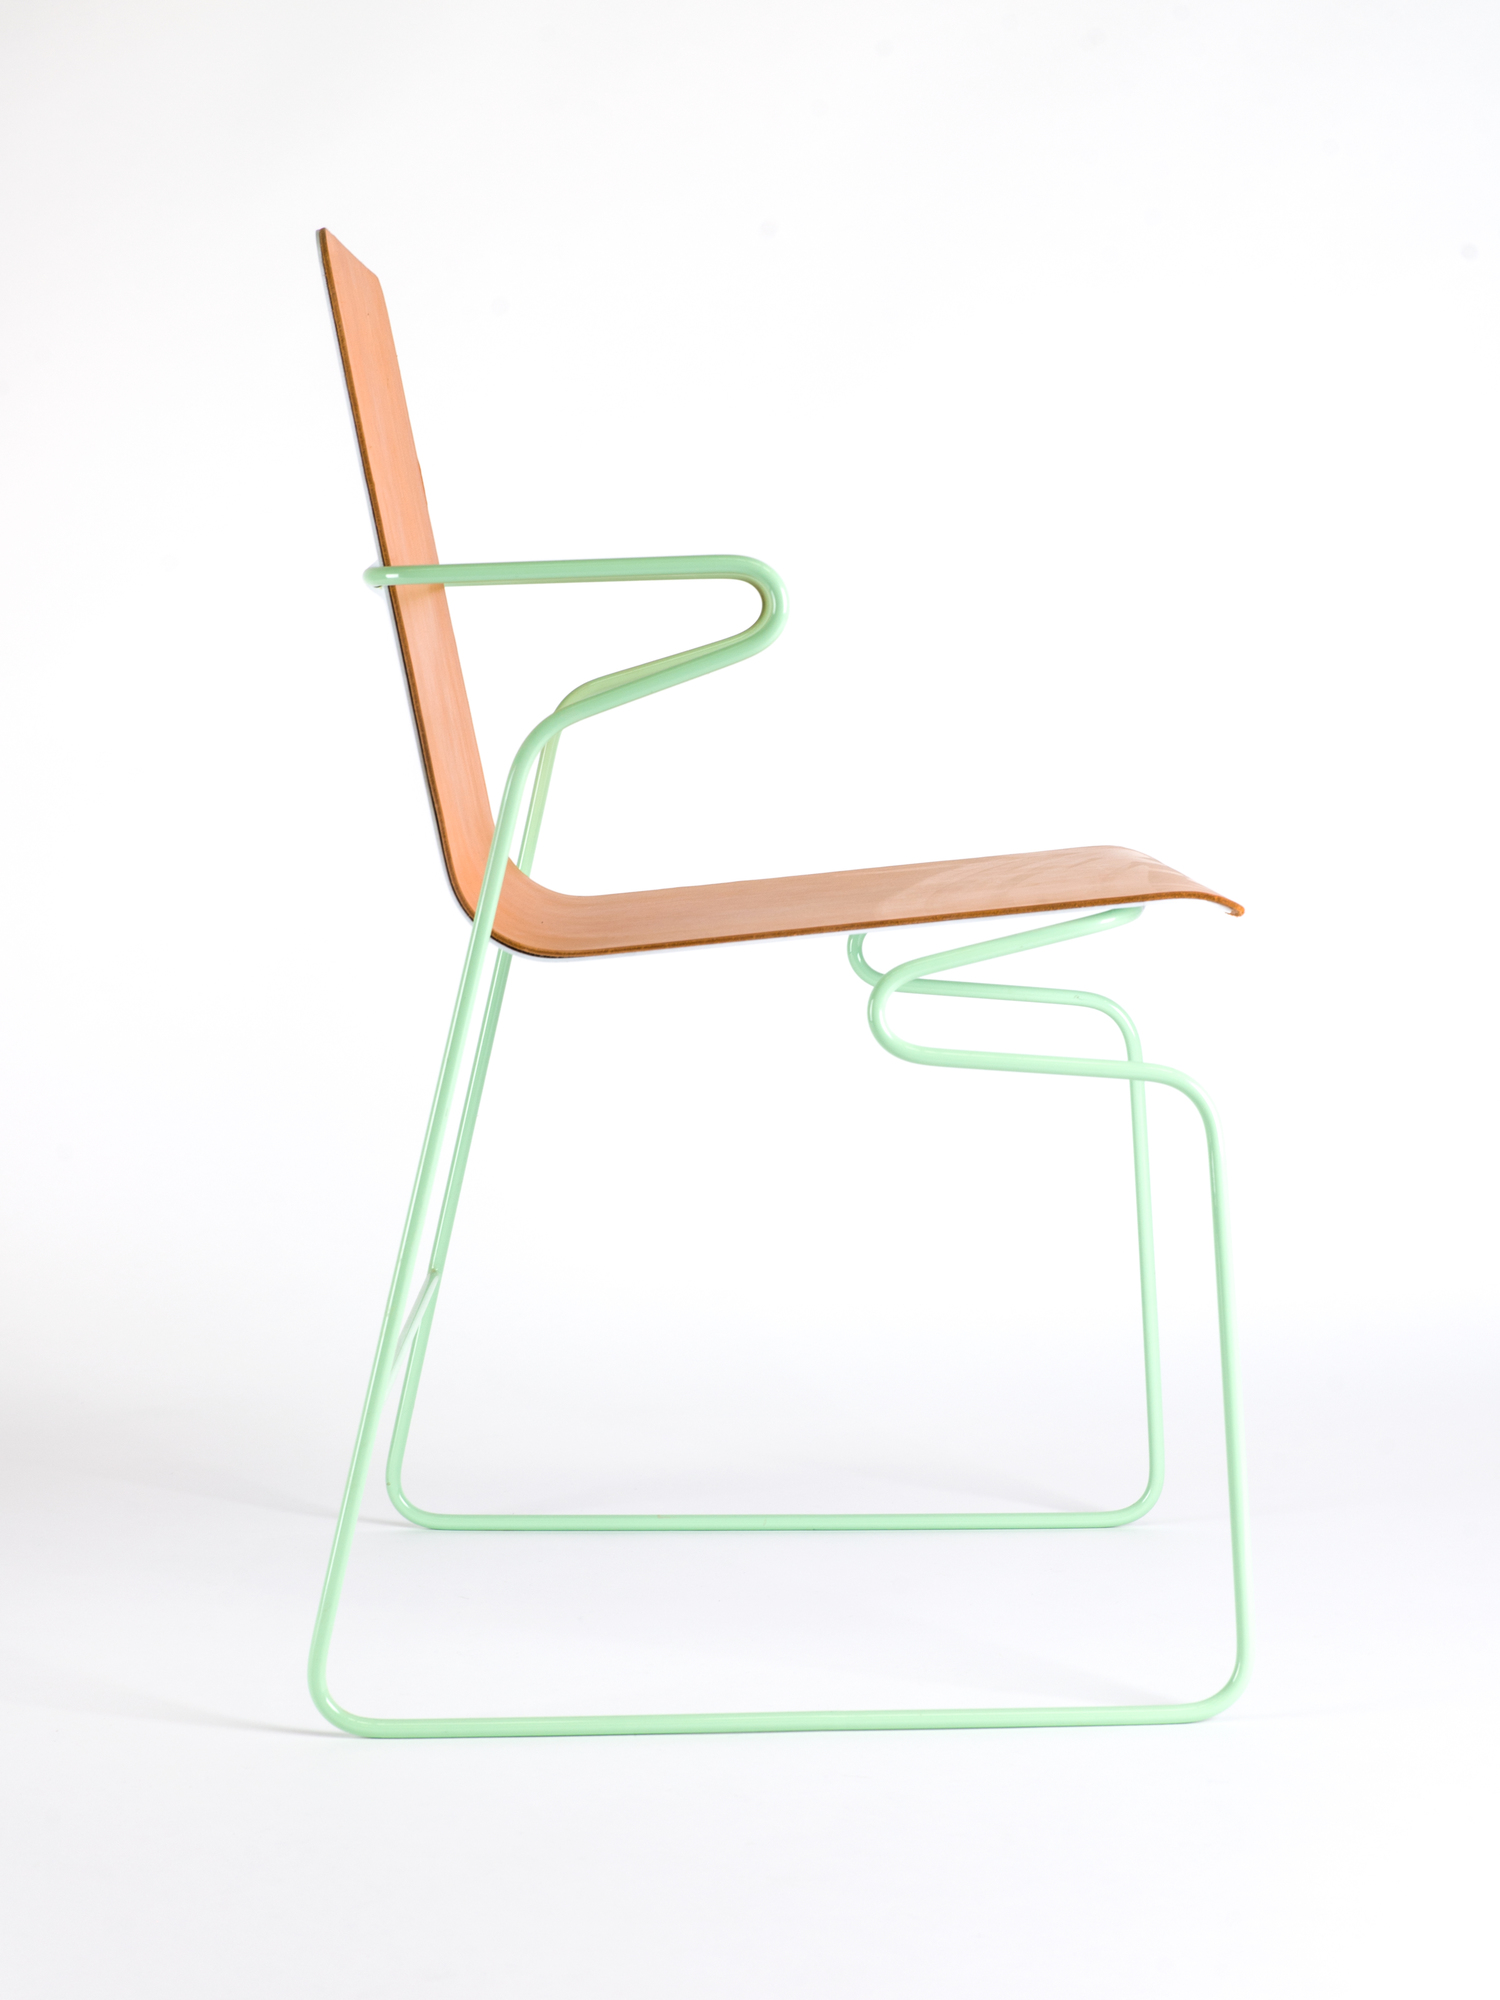 Bender Chair / Frederik Kurzweg Design Studio (5)